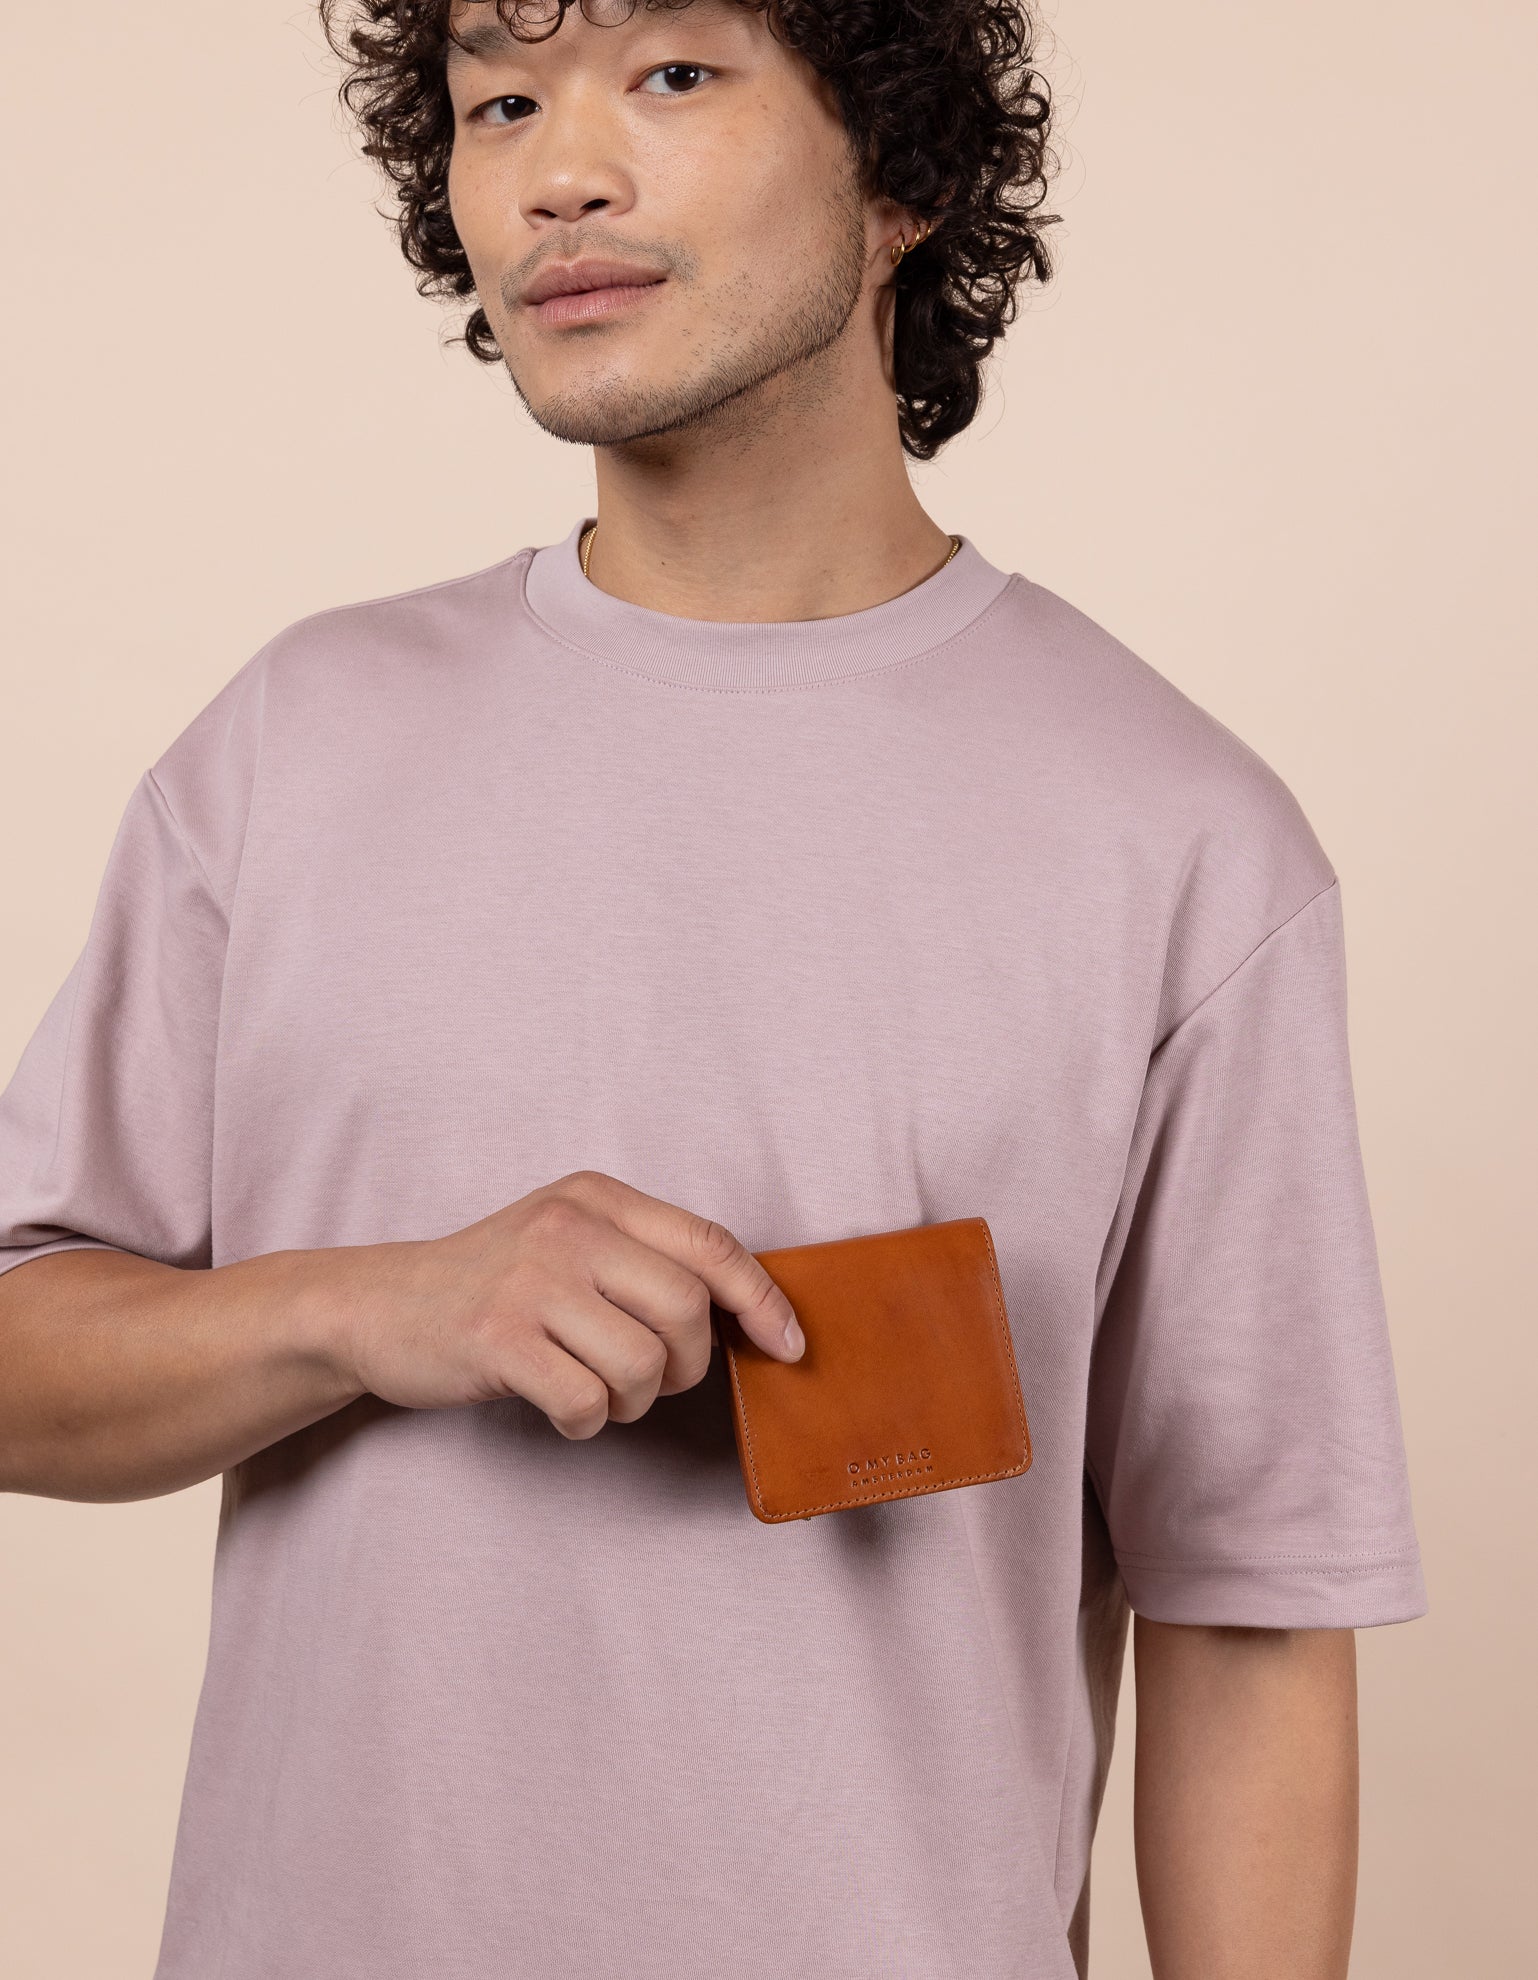 Alex's Fold-over Wallet Classic Leather cognac colour. Medium size, square shaped wallet, model image